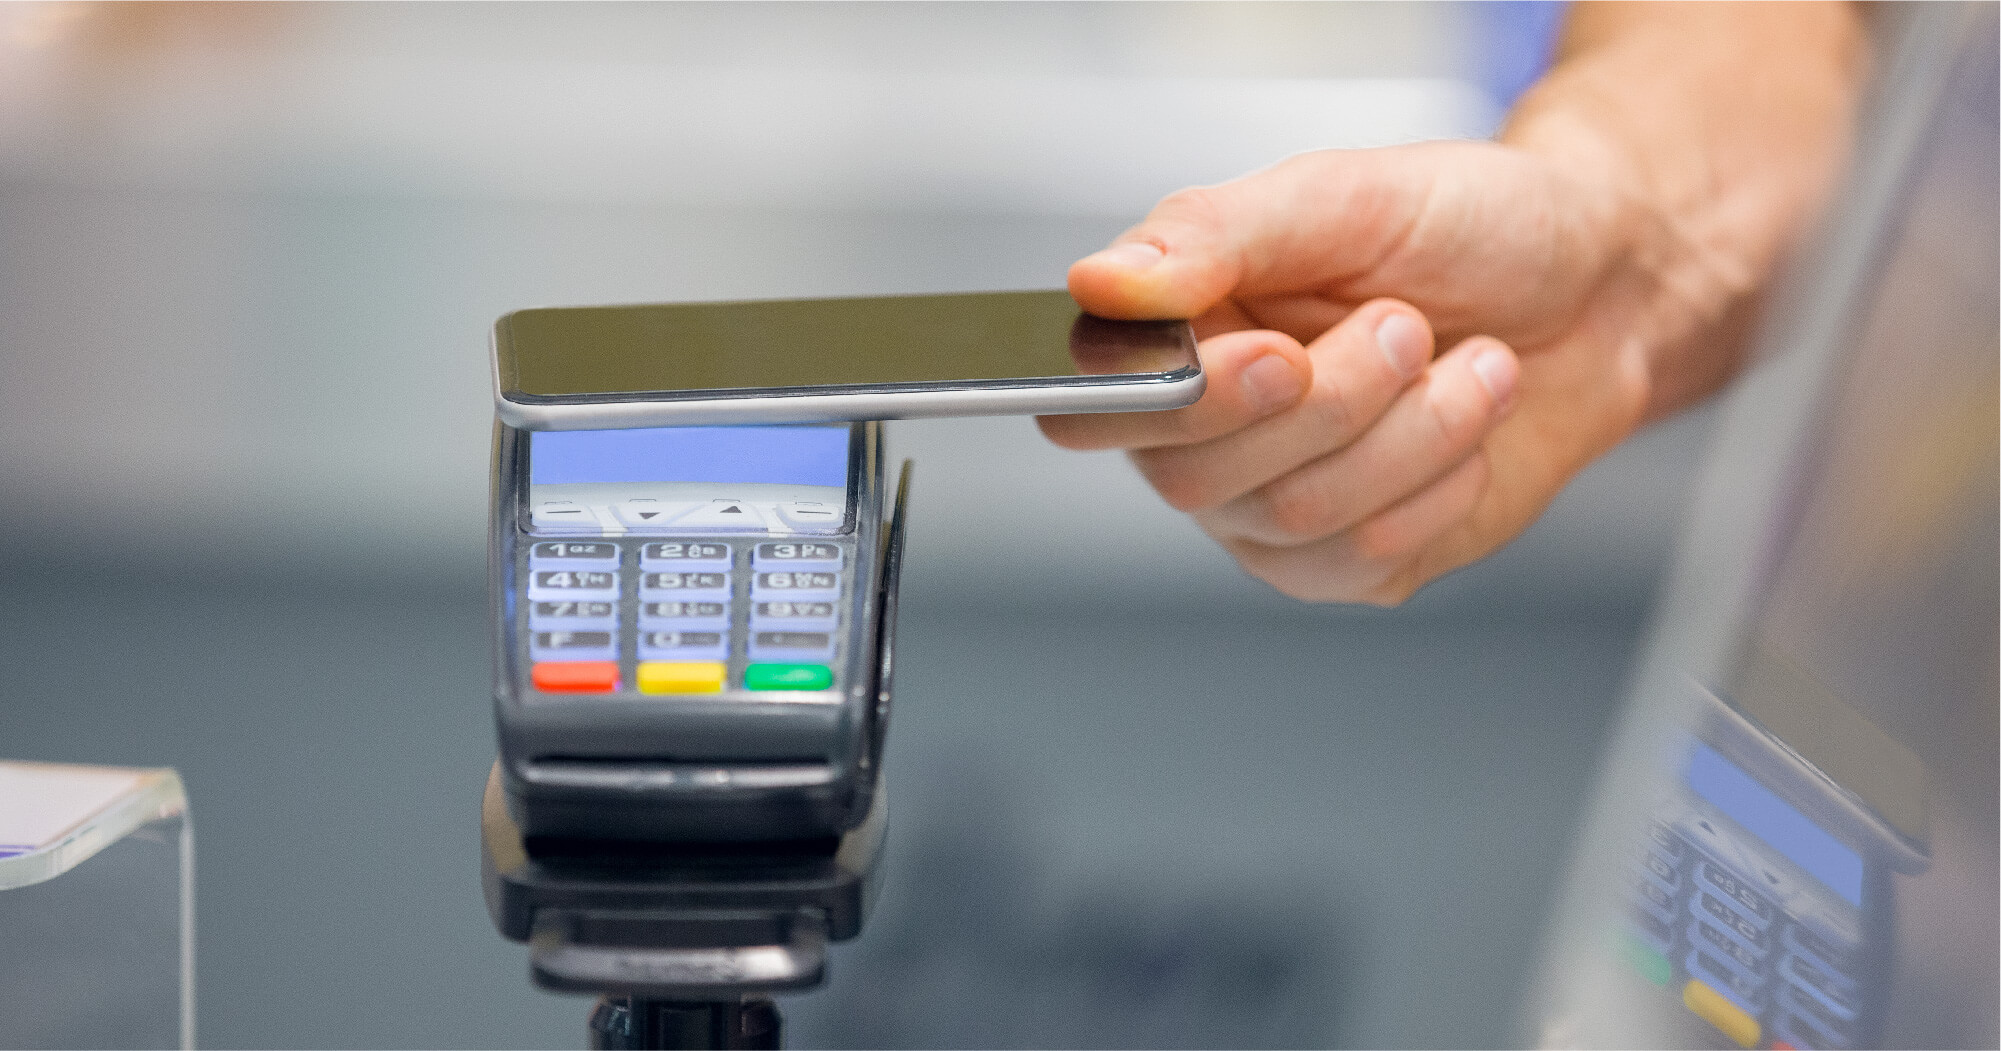 mobile wallet payment - SingSaver